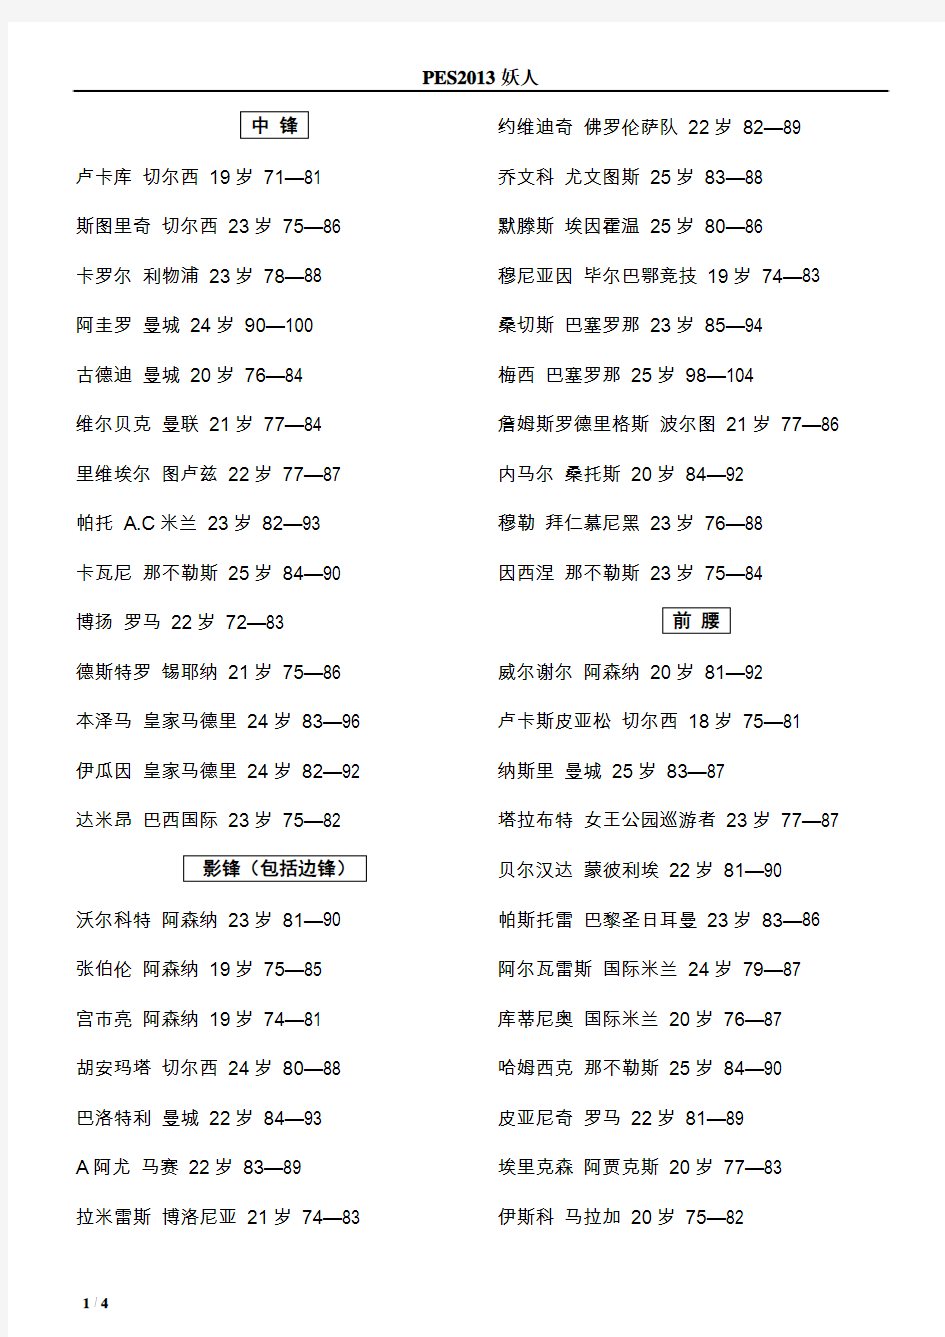 PES2013妖人名单[全,打印版]